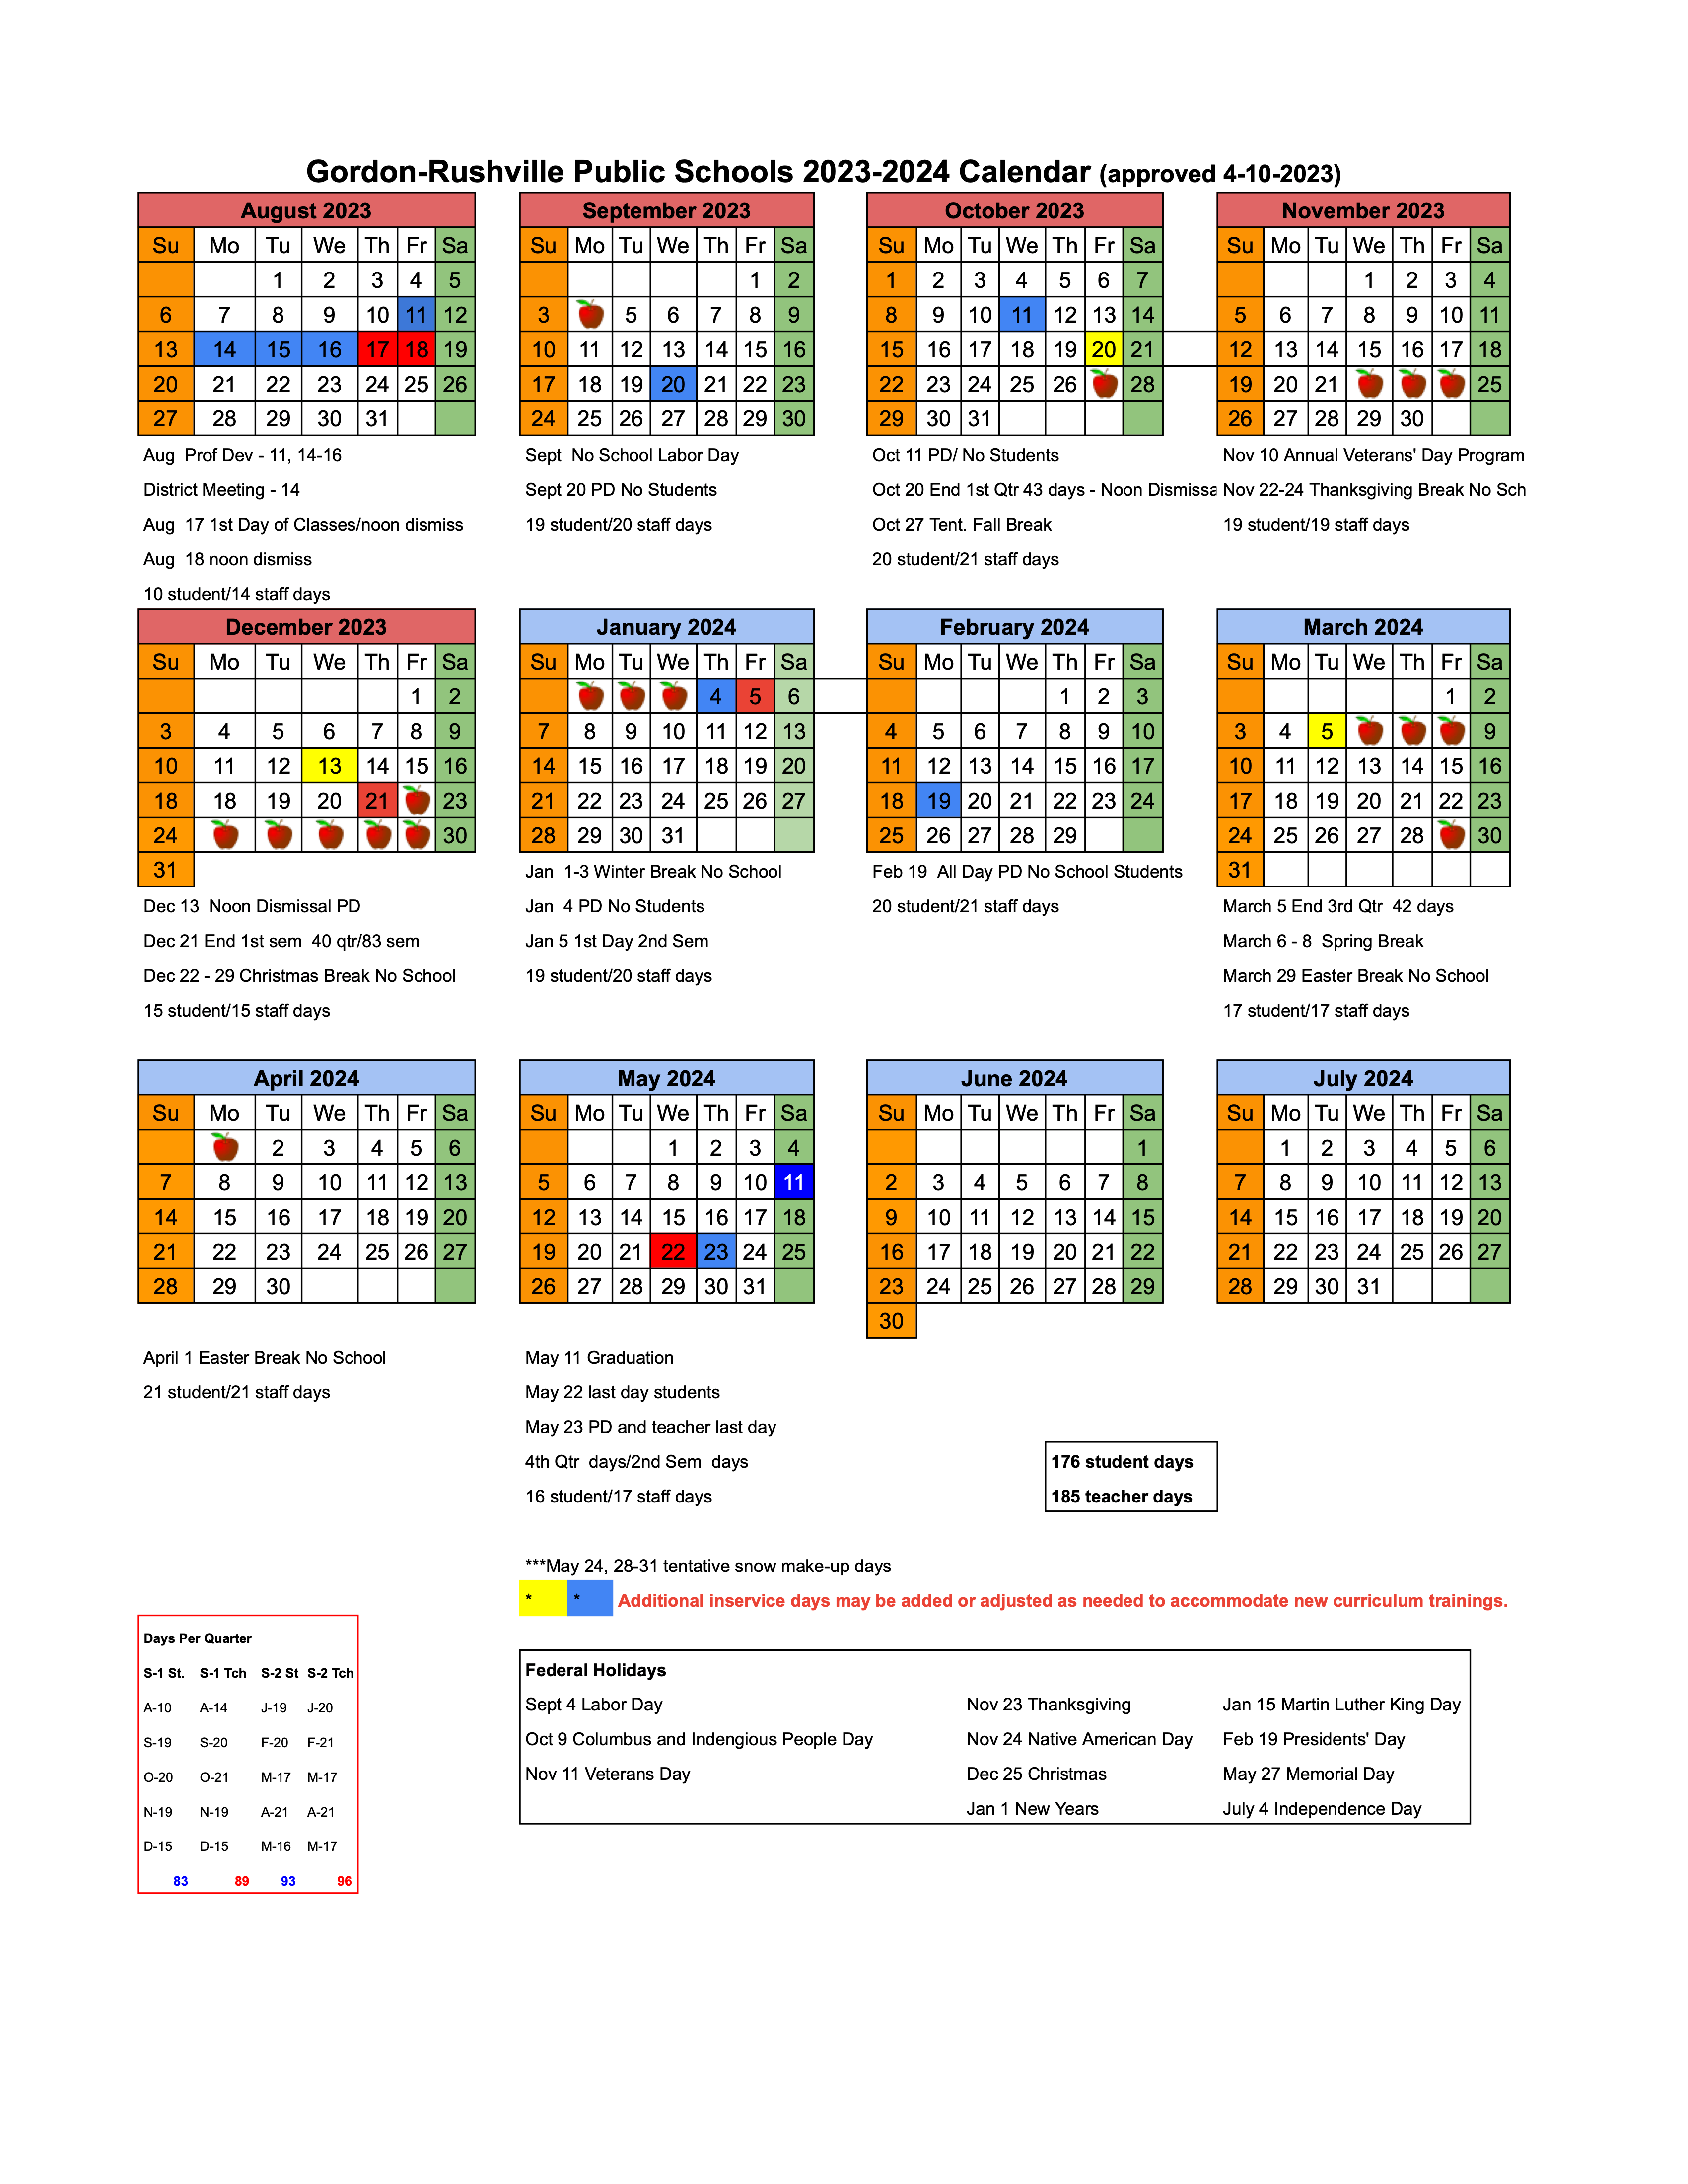 GRPS 202324 School Day Calendar GordonRushville Public Schools